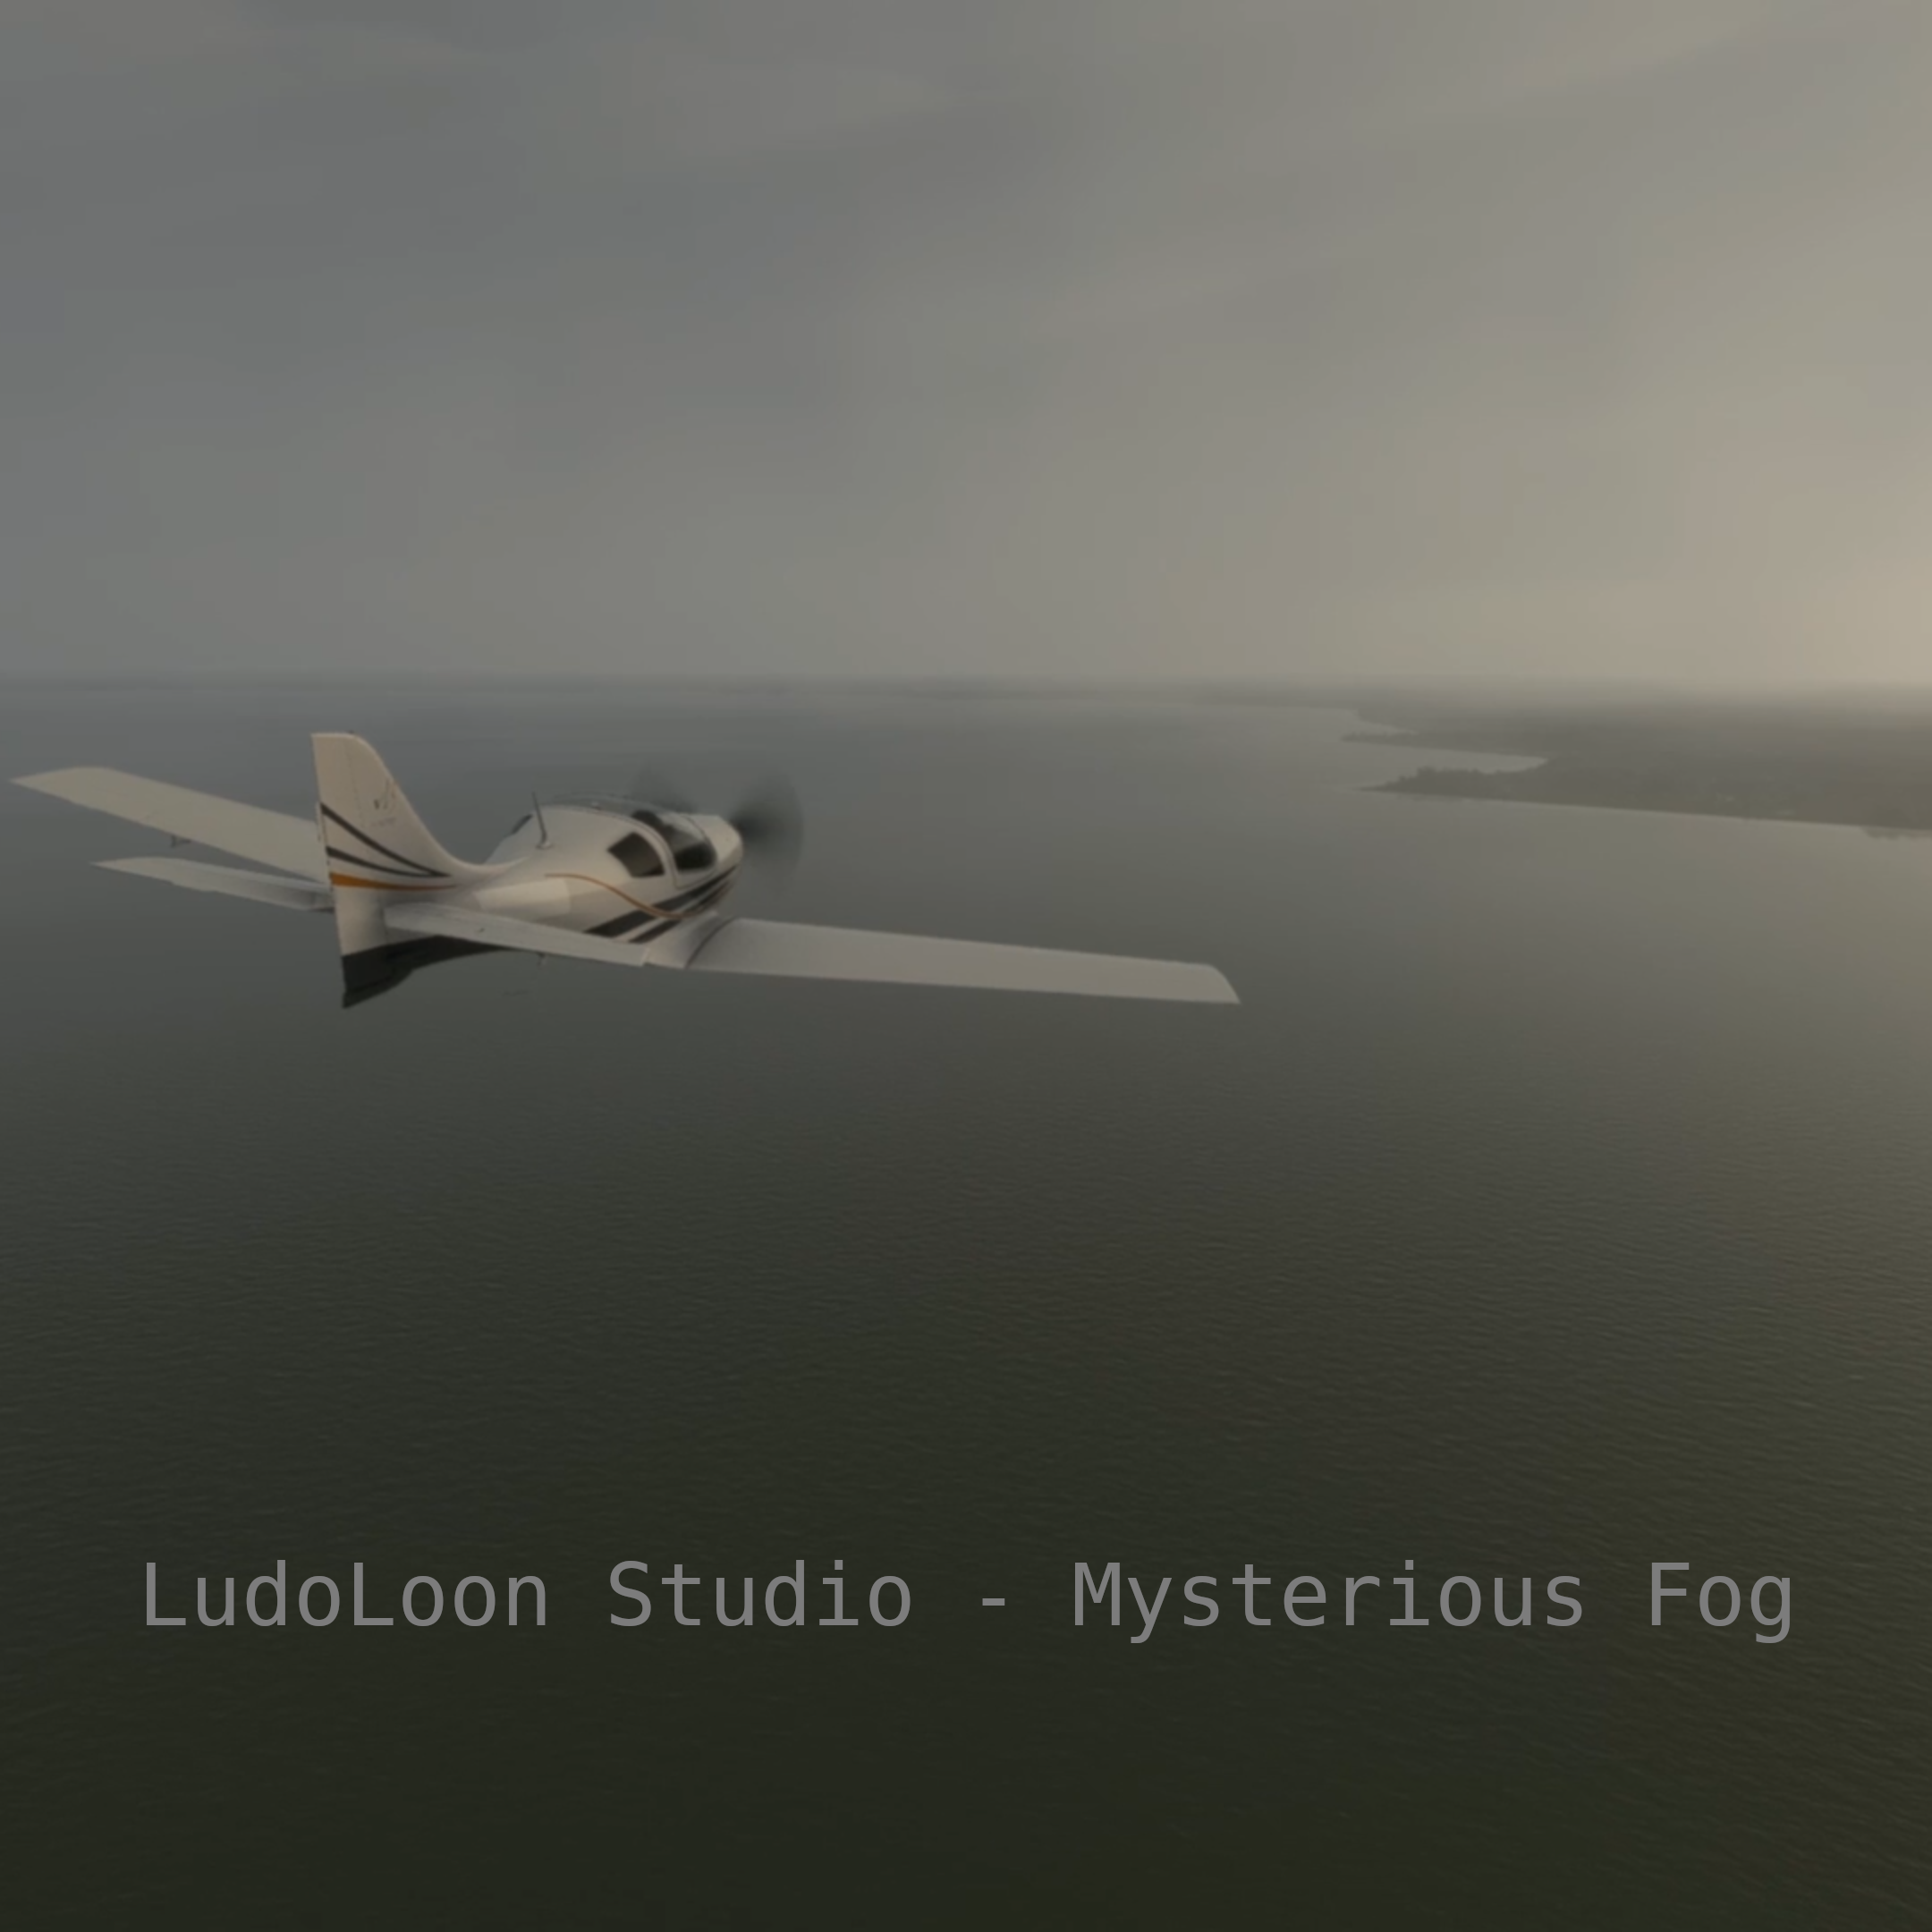 LudoLoon Studio - Mysterious Fog